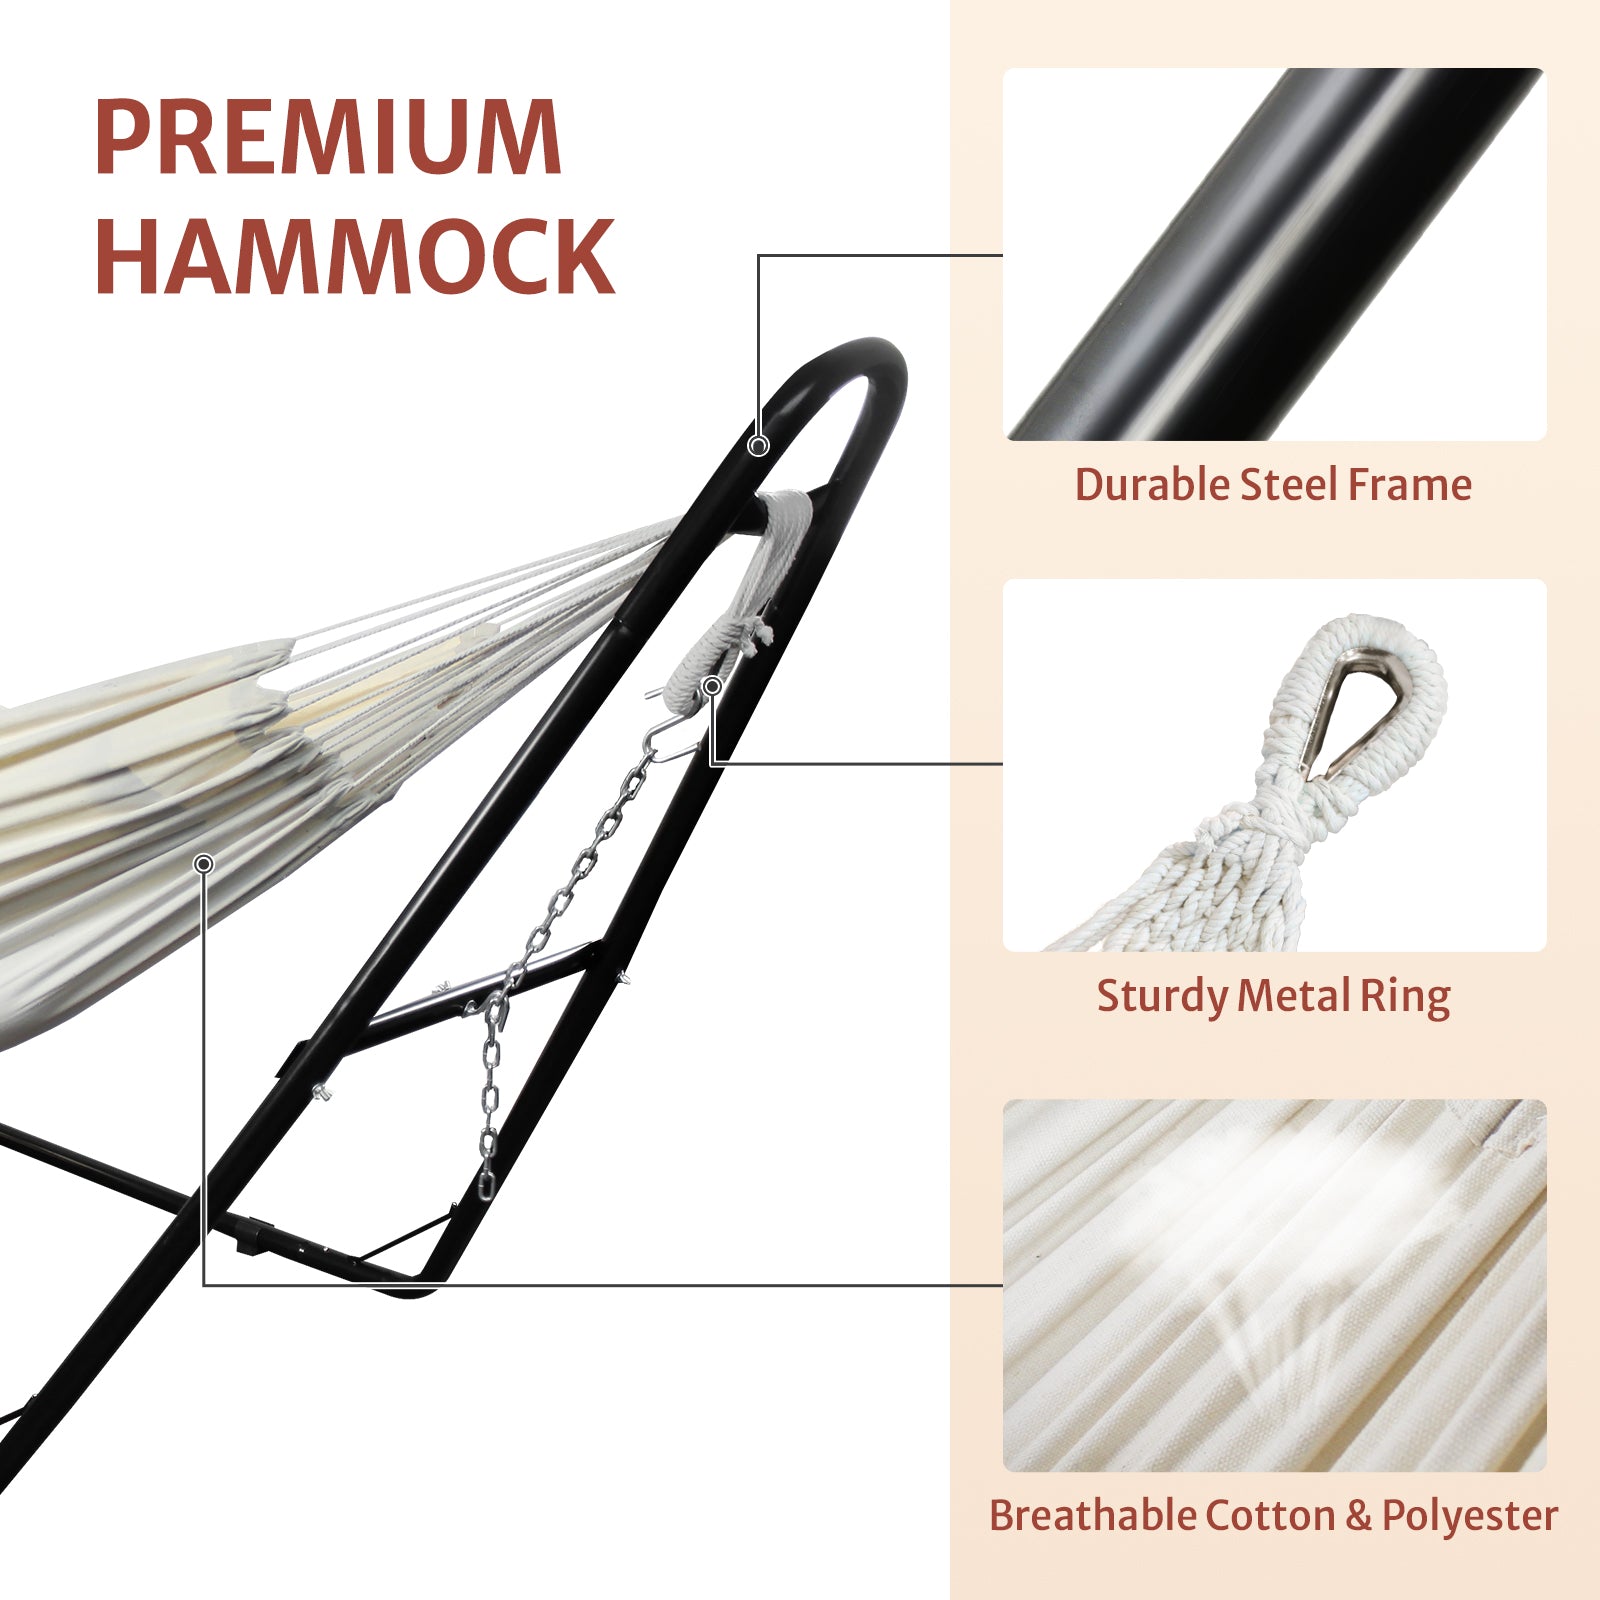 Todeco-Standing-Hammock-Hammock-with-Metal-Stand-Carry-Bag-Adjustable-Height-Hammock-Stand-for-Indoor-Outdoor-Garden-Patio-Camping-Beach-Maximum-Load-200kg-Brown